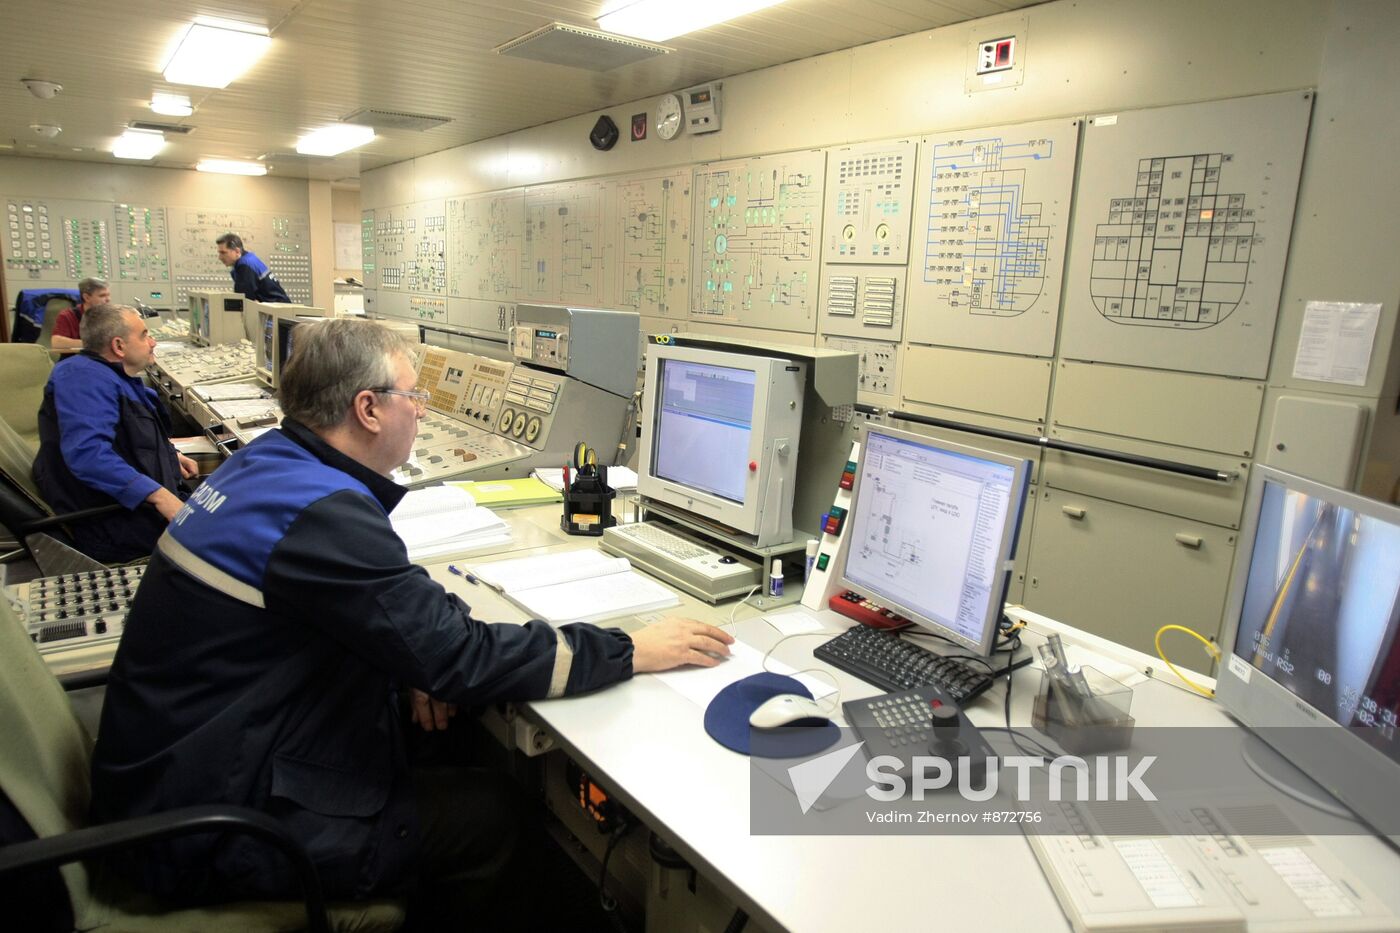 Vaigach nuclear icebreaker Central Control Room